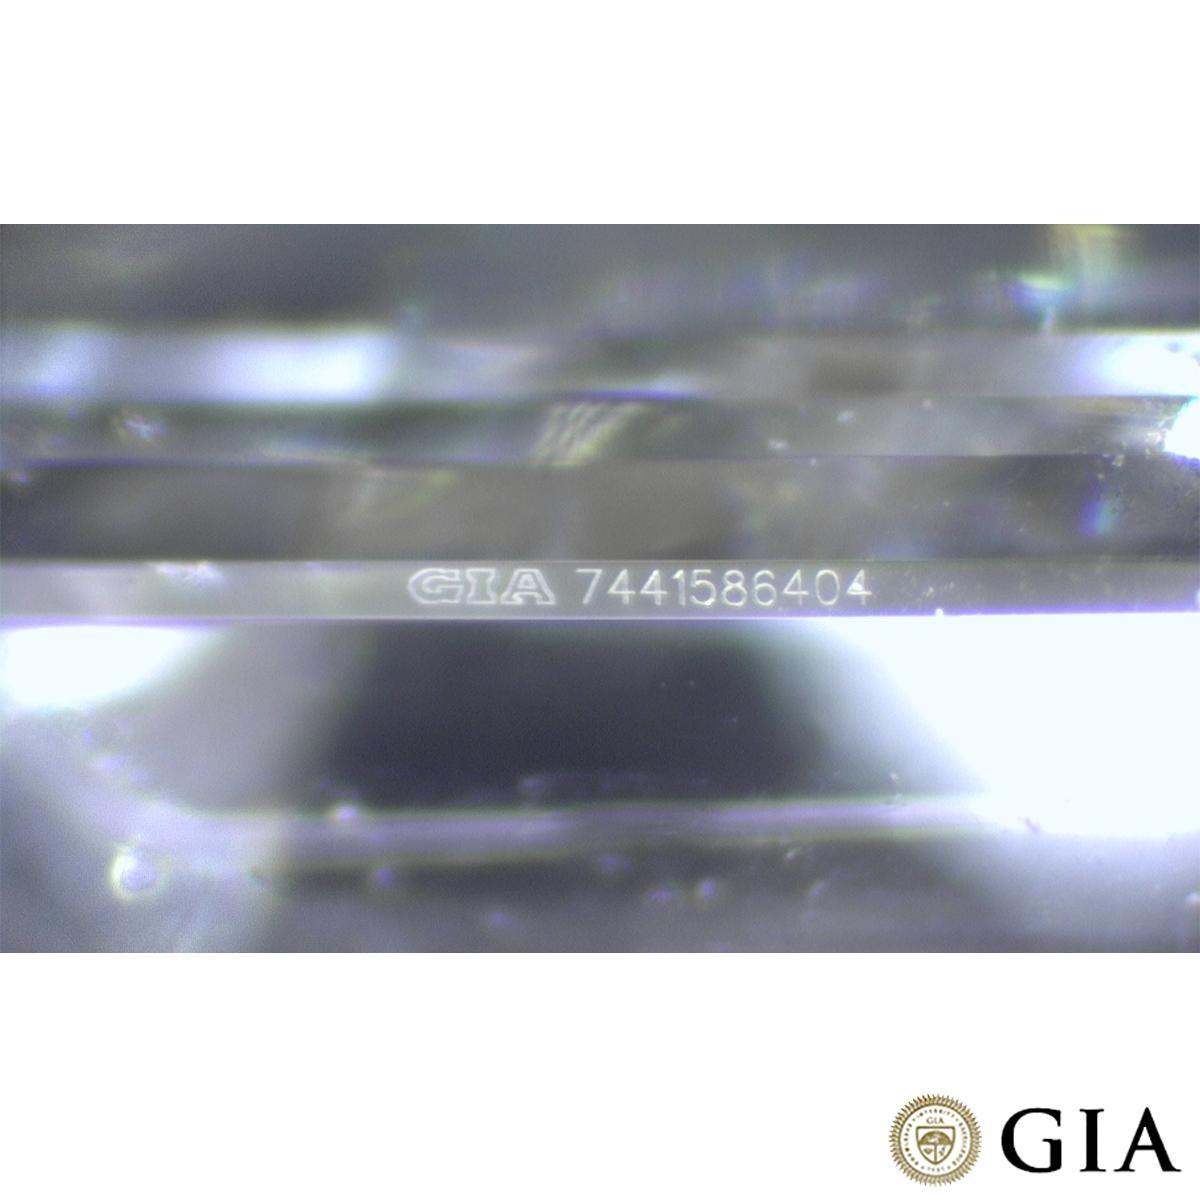 GIA Certified White Gold Emerald Cut Diamond Ring 0.43ct E/VS2 For Sale 1